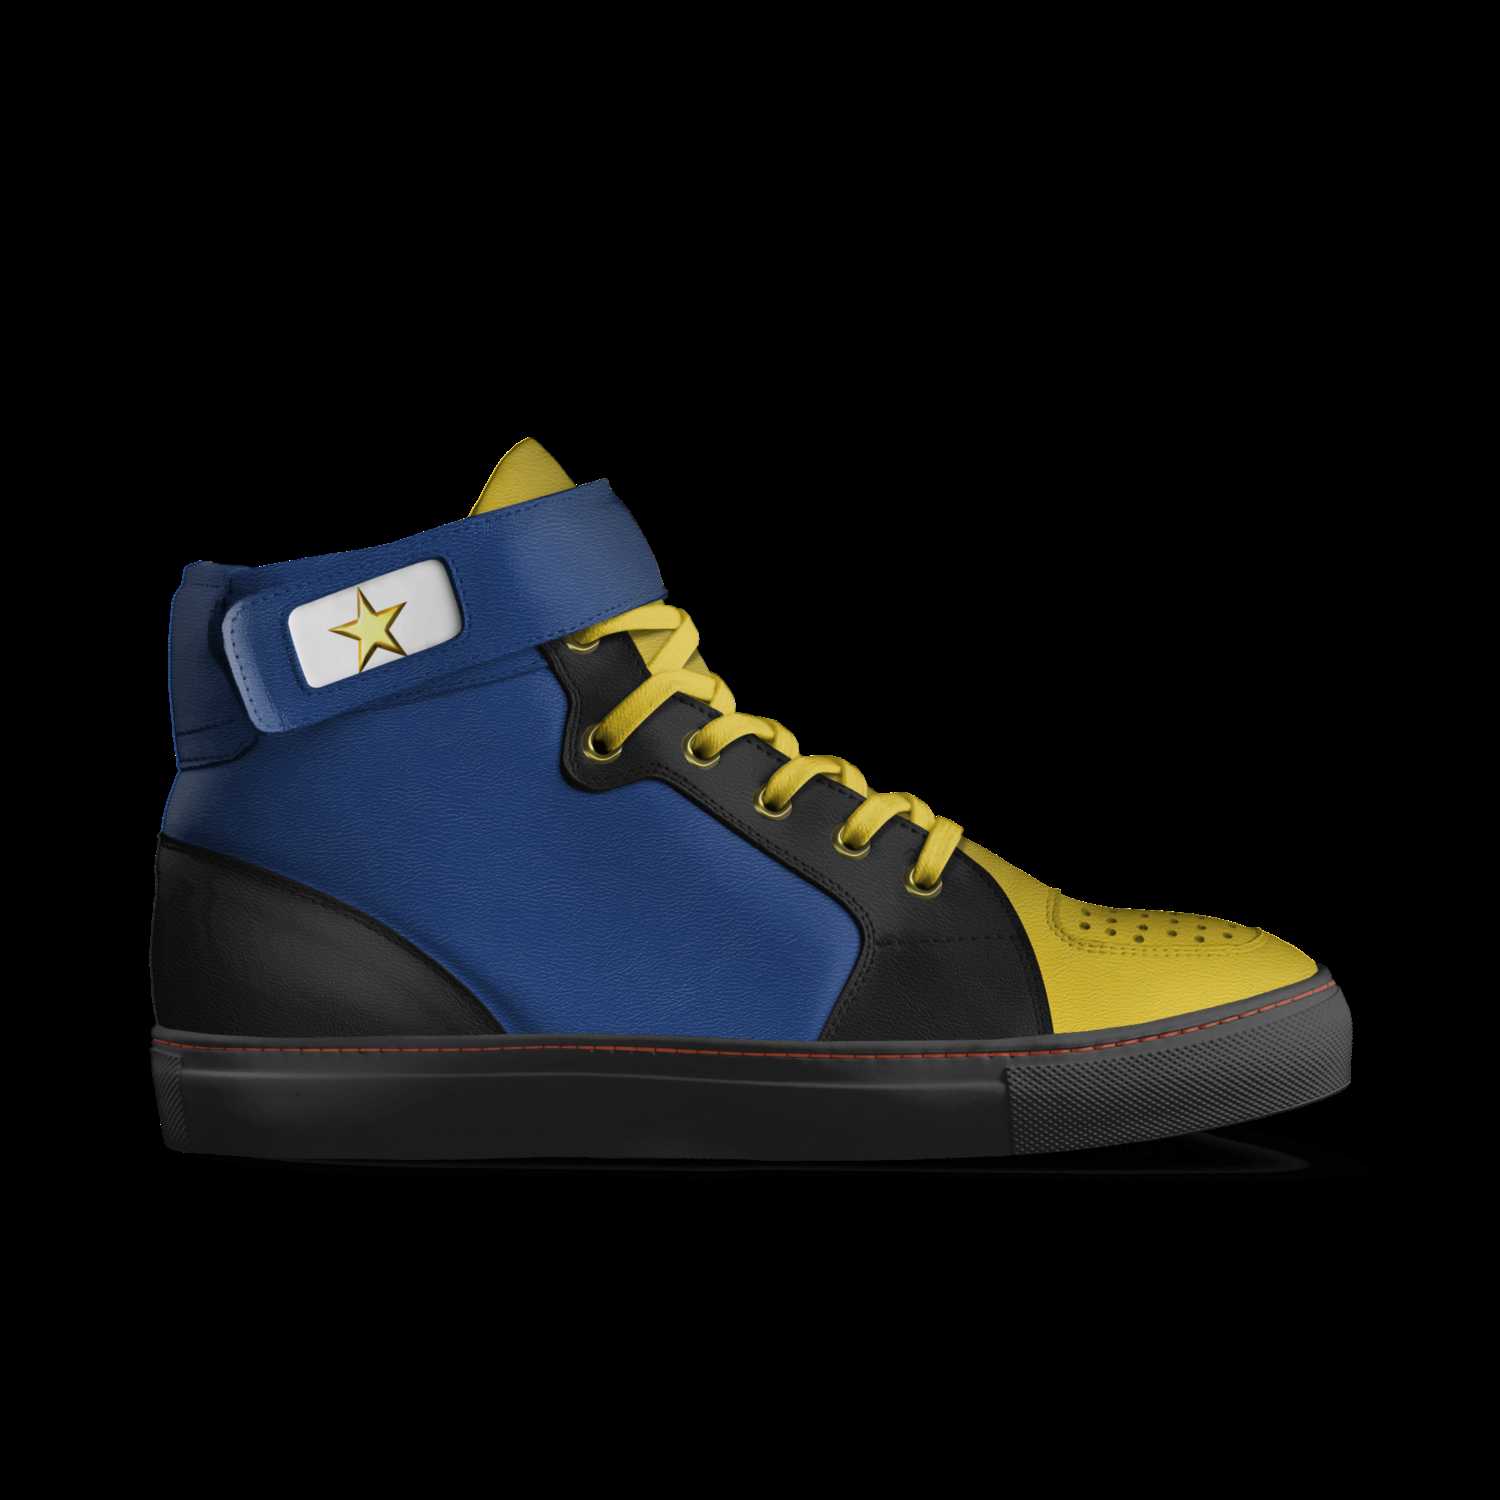 A Custom Shoe concept by Junior Hargis